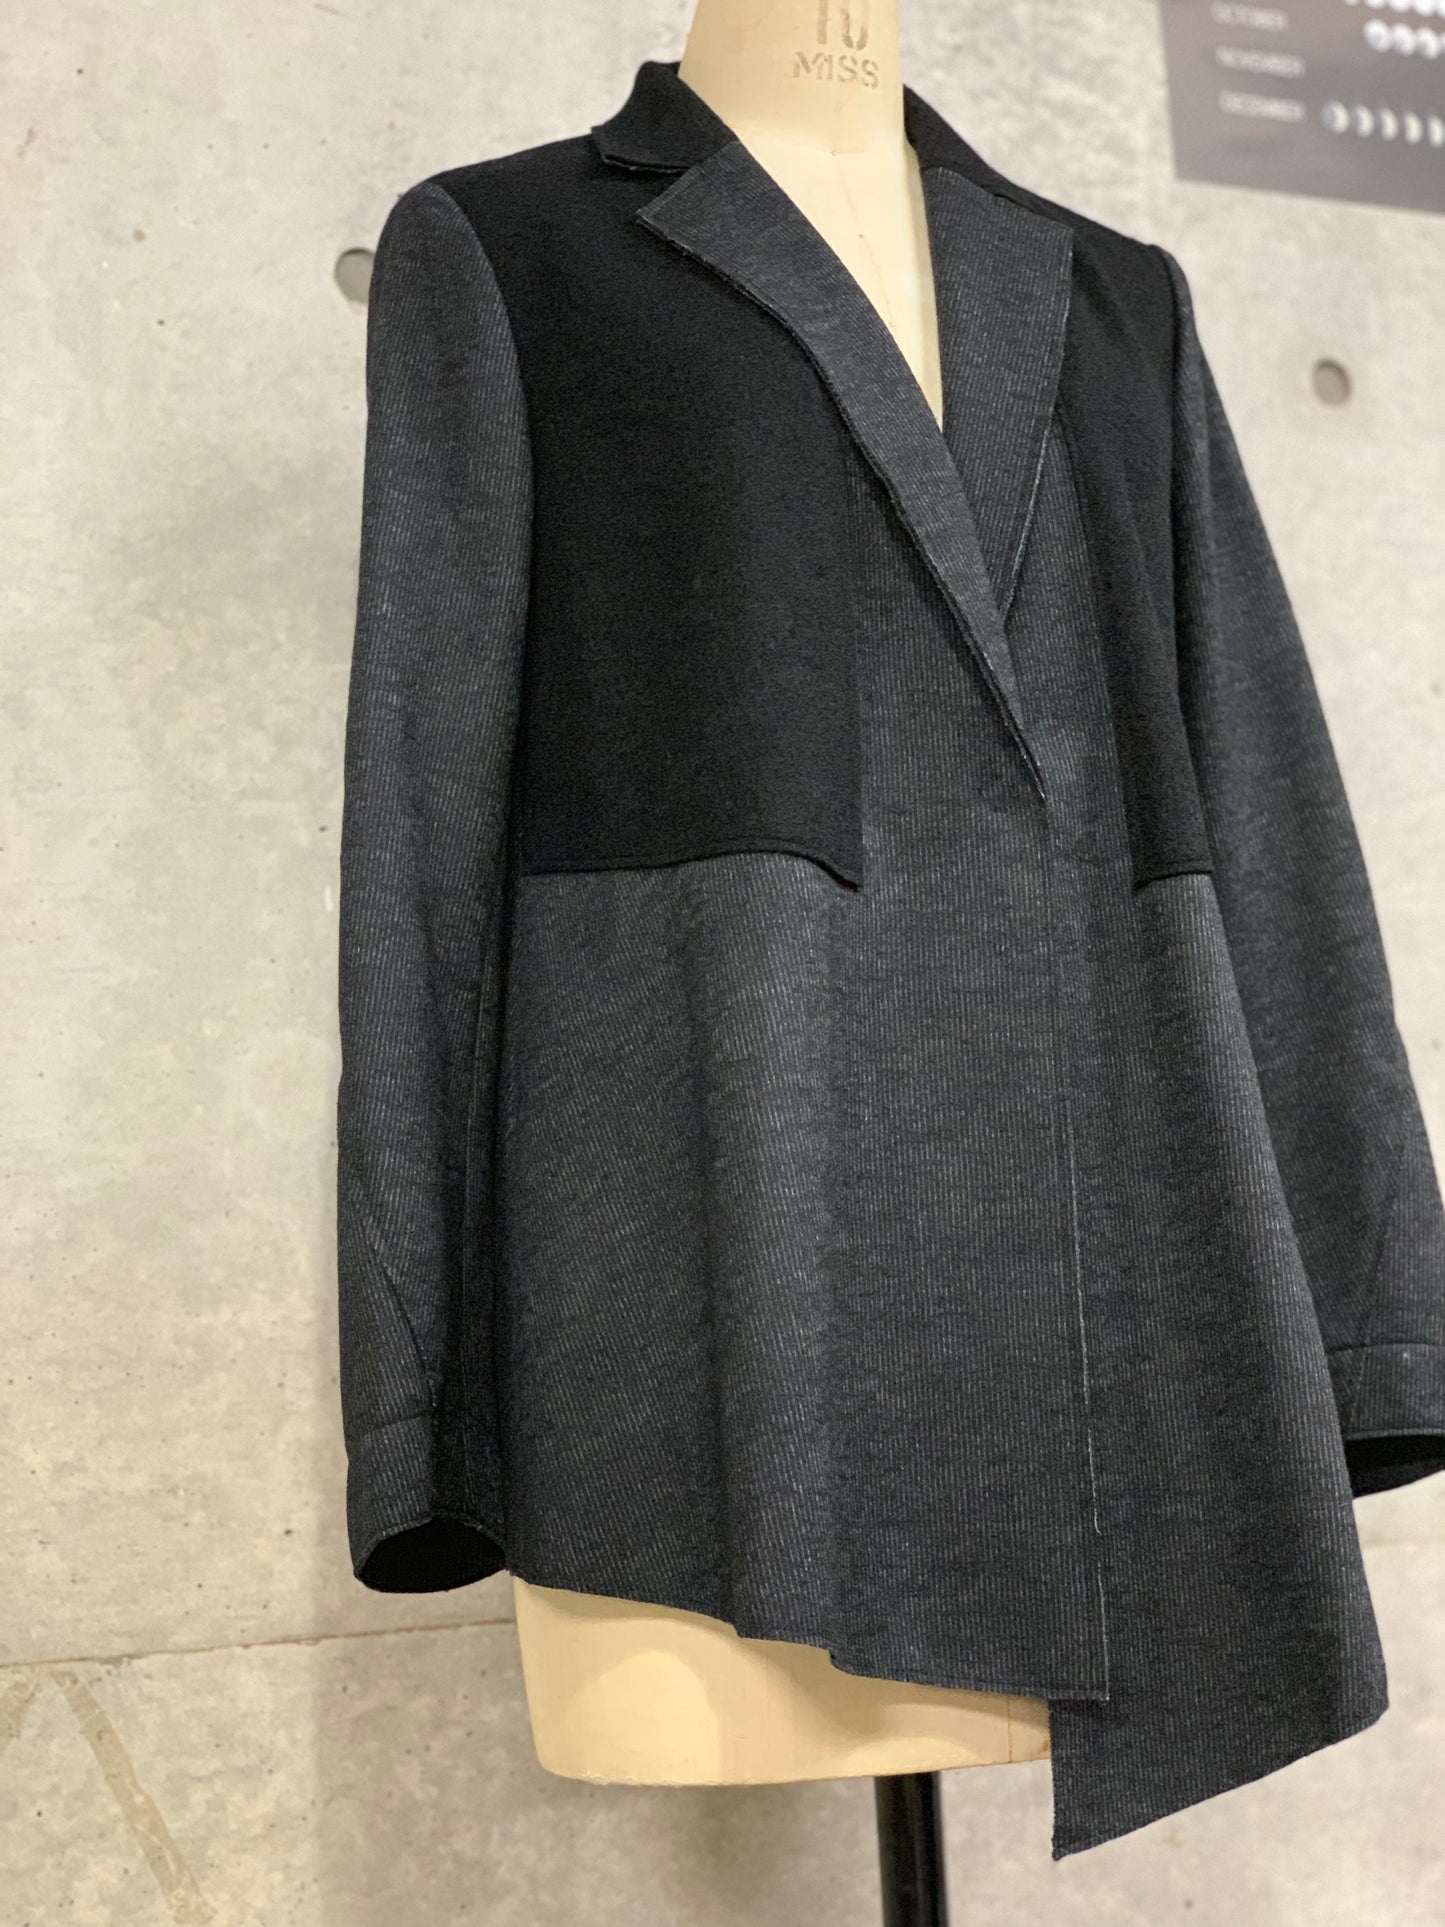 Draping Paneled Jacket in Inkline Black Wool